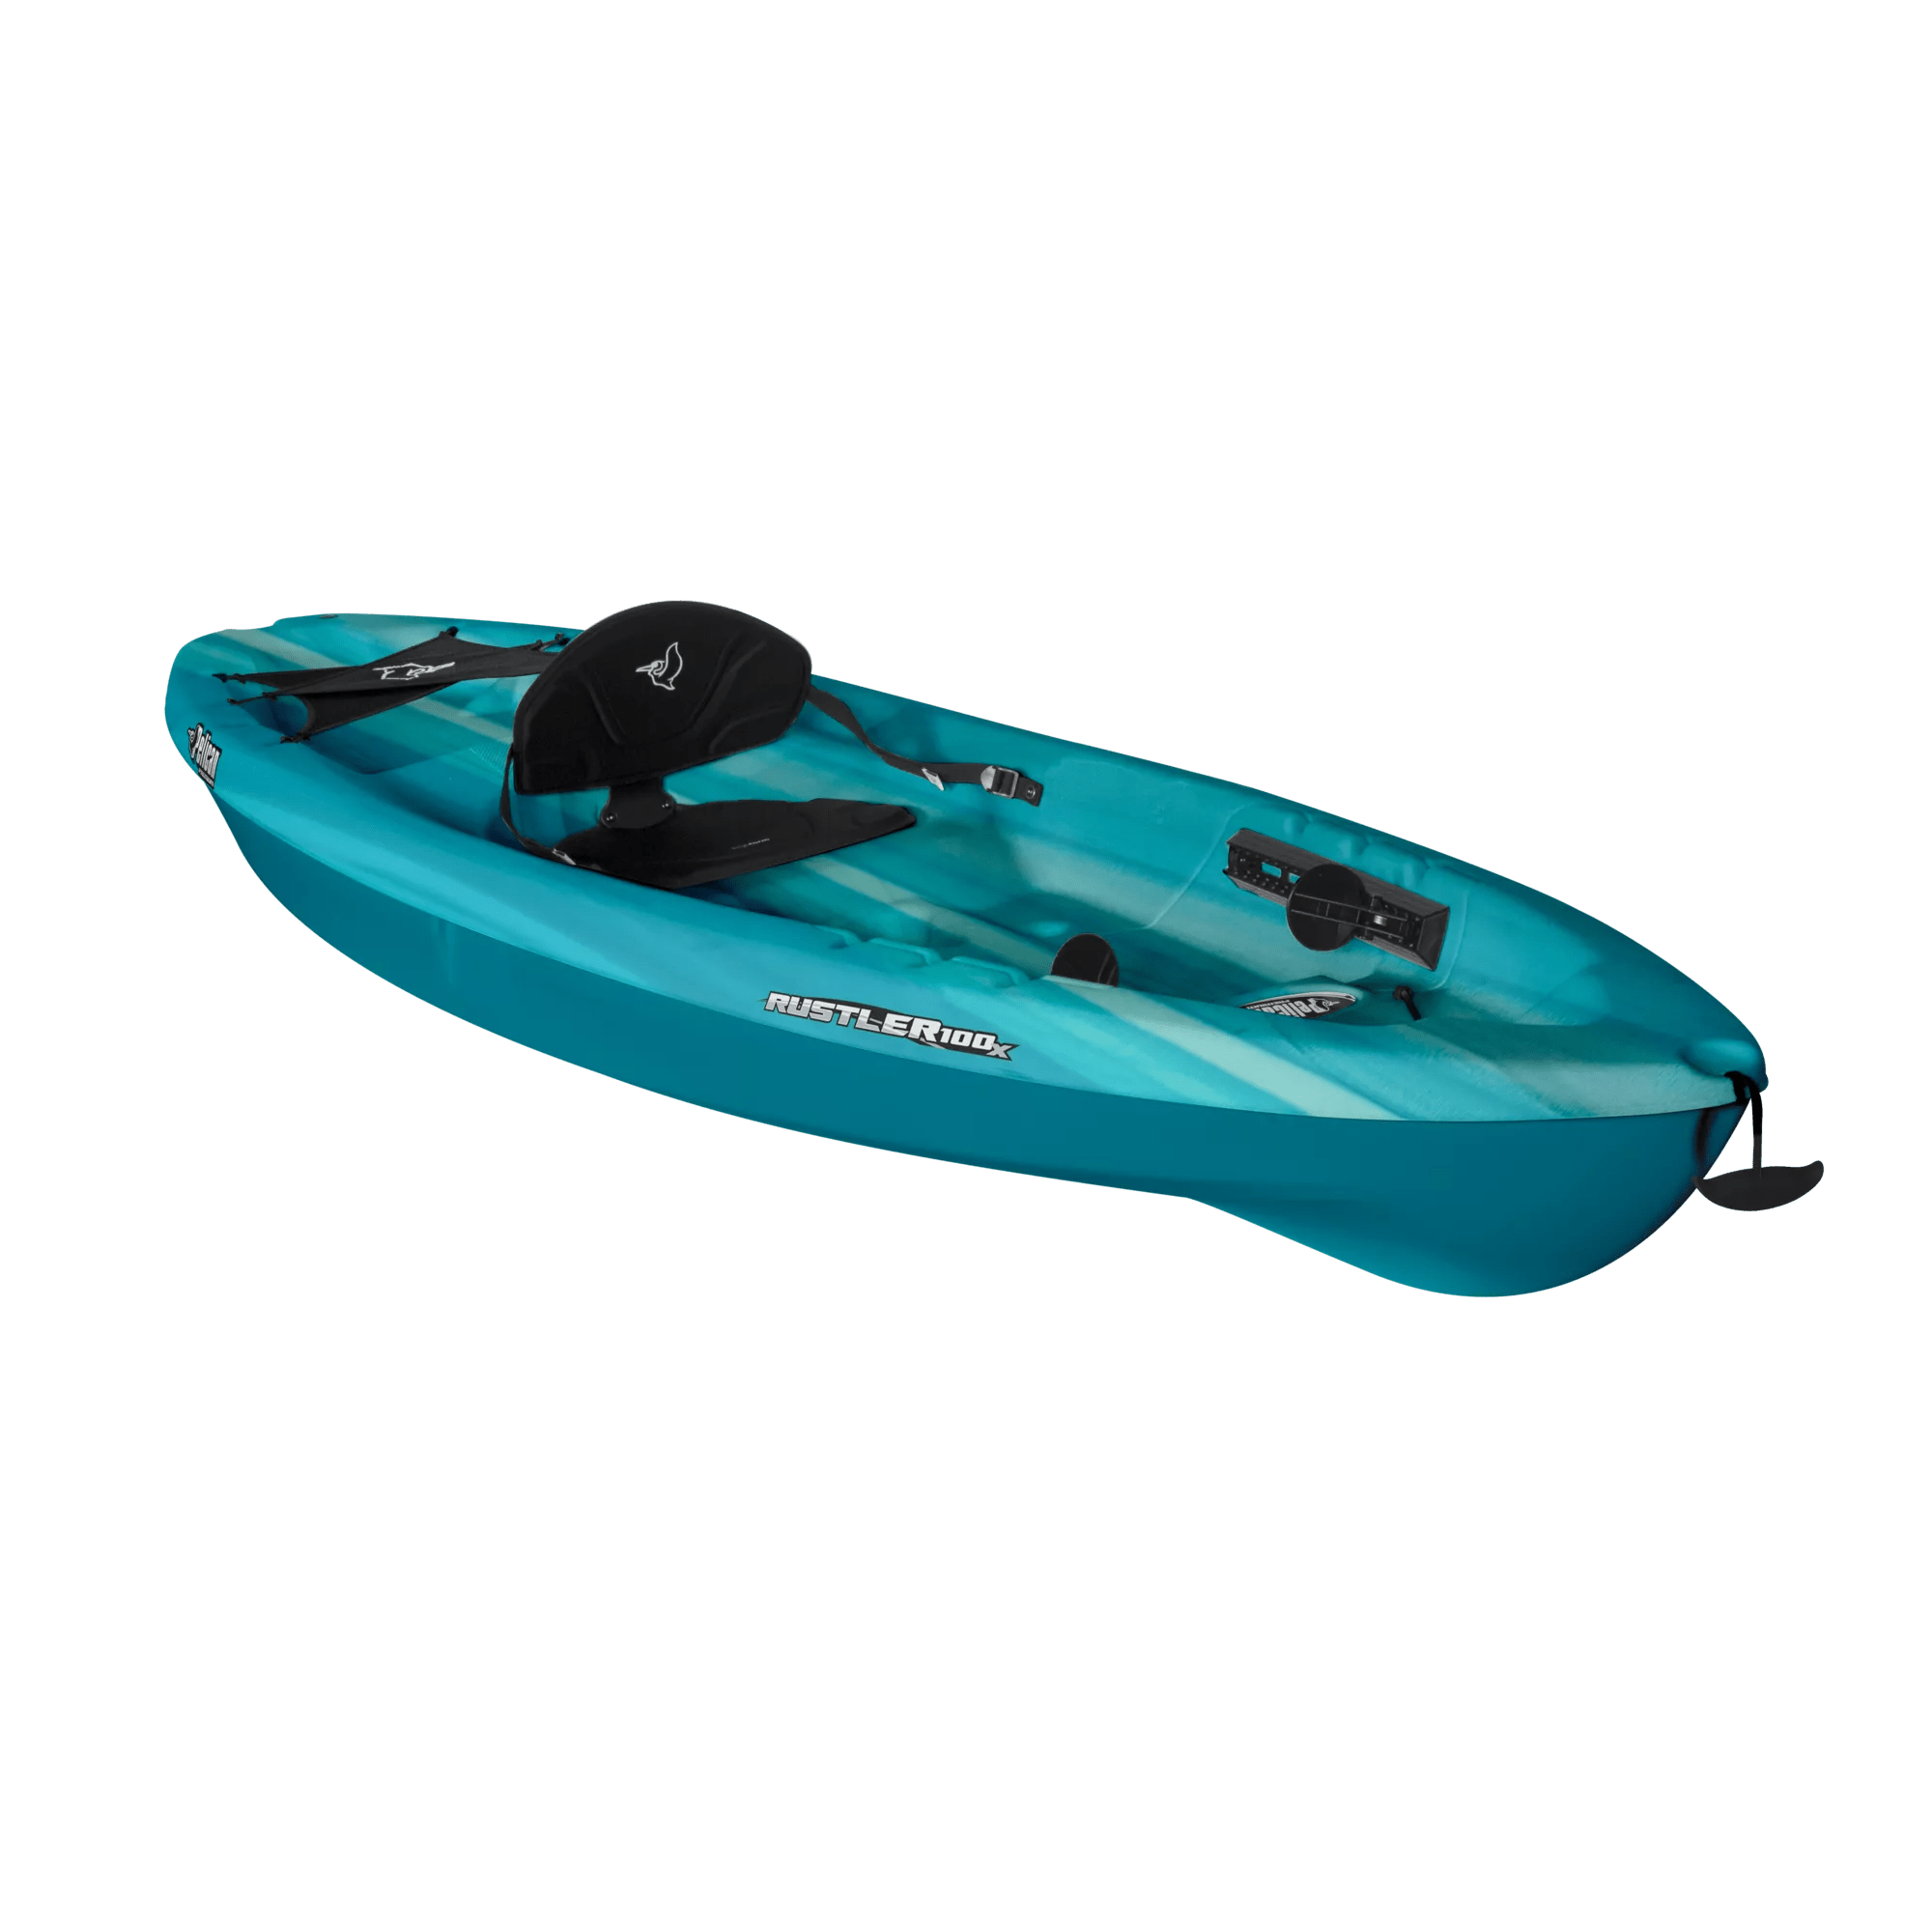 PELICAN - Rustler 100X Recreational Kayak - Blue - KVP10P100 - ISO